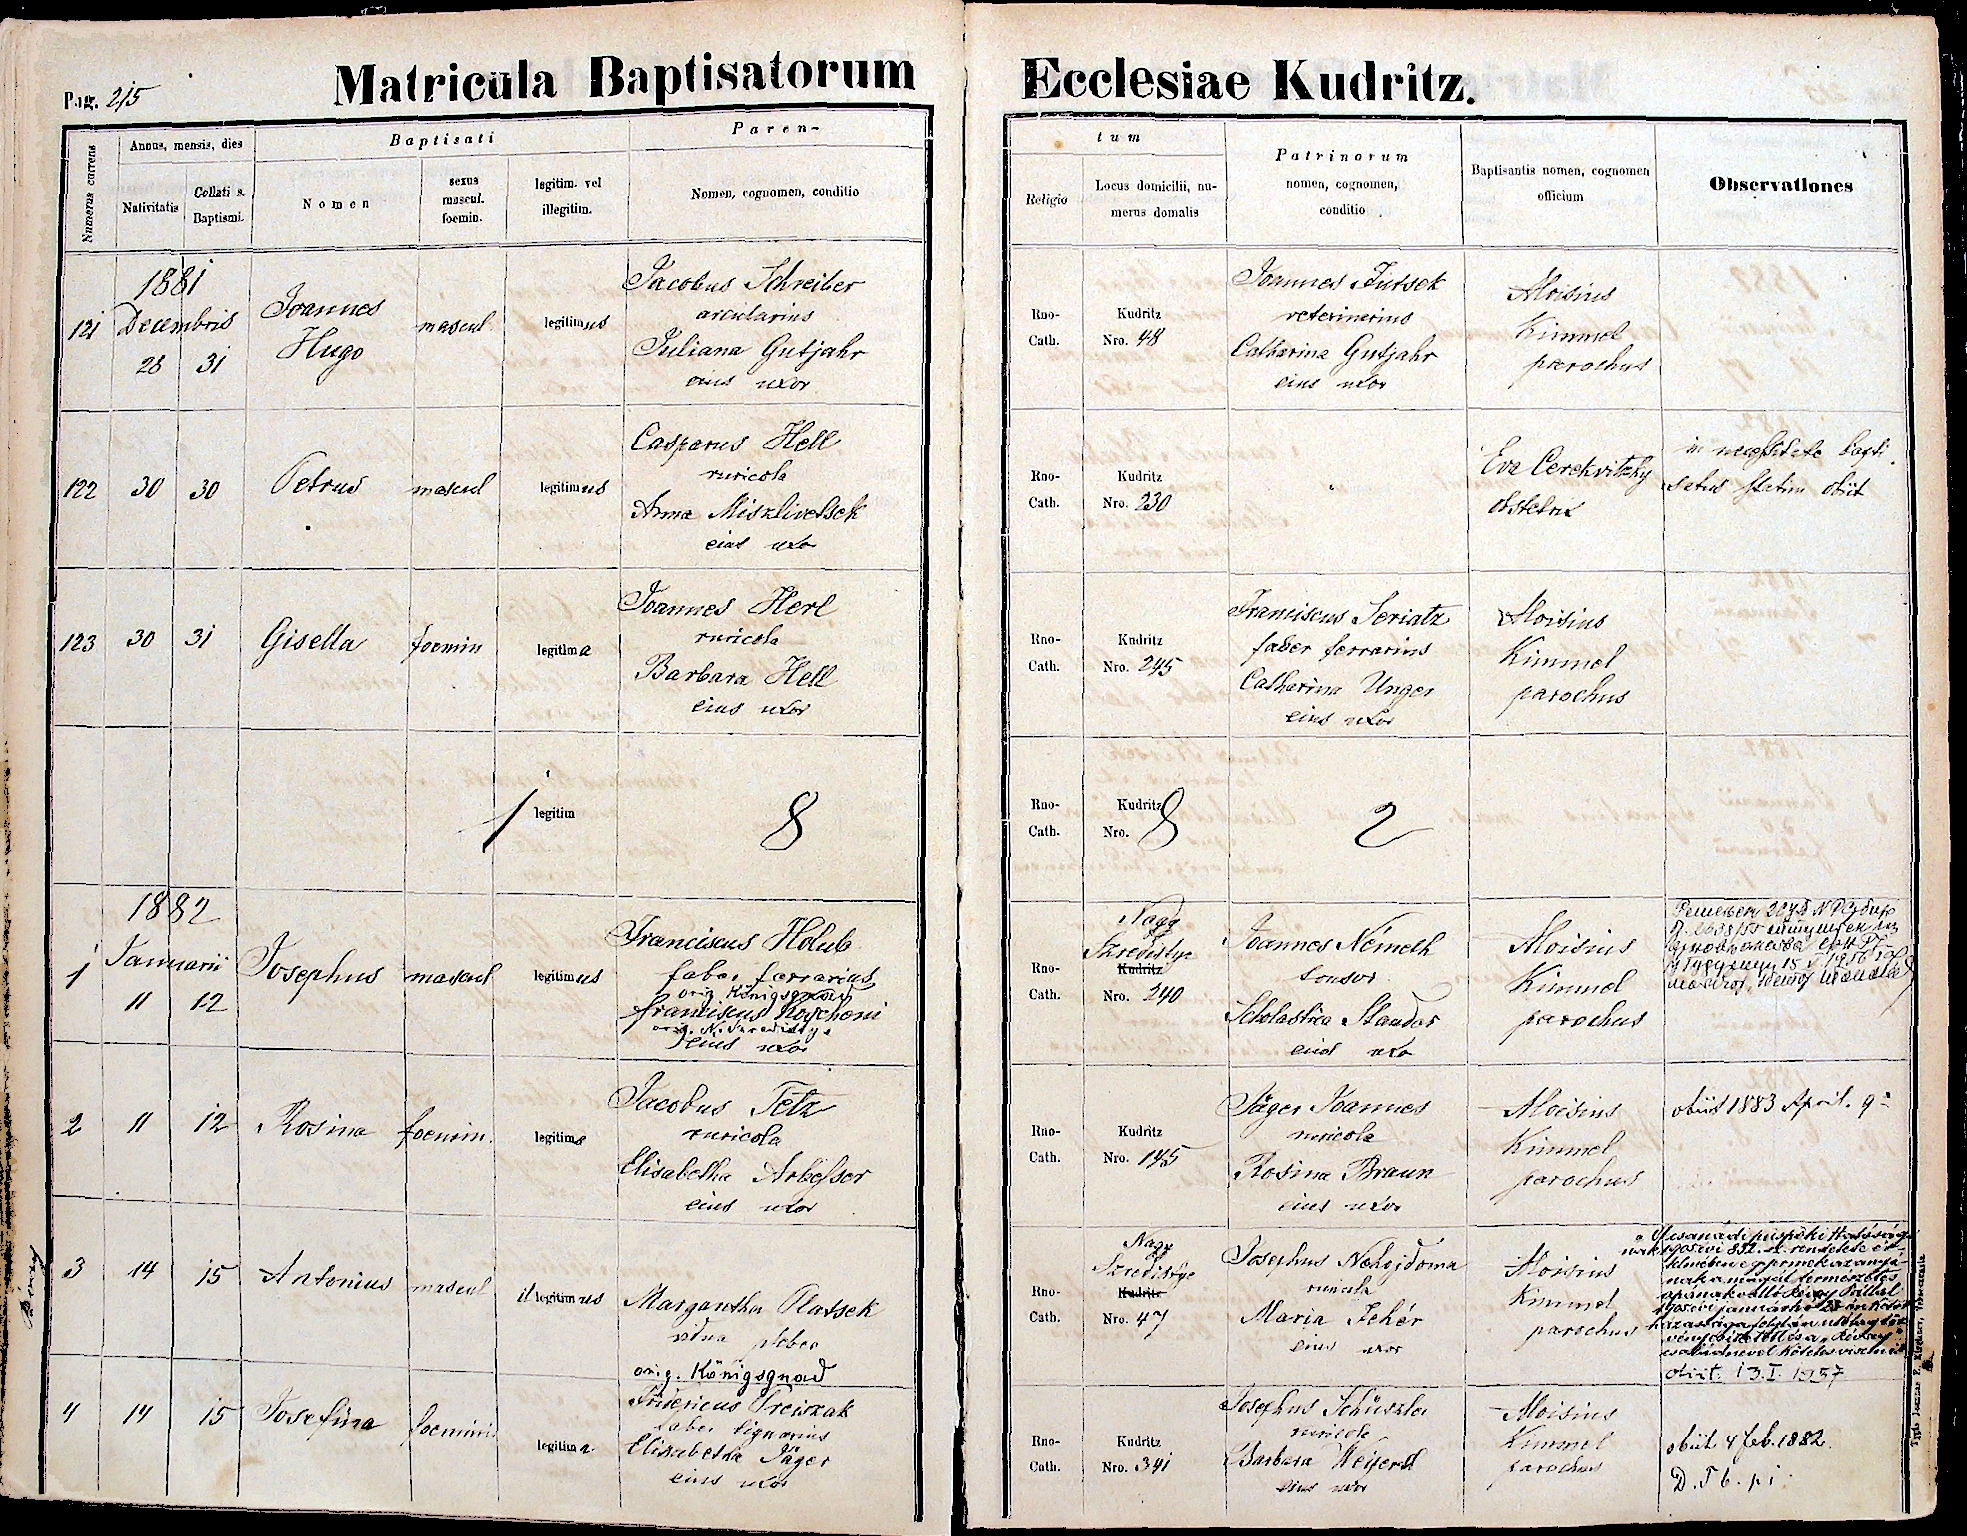 images/church_records/BIRTHS/1884-1899B/1899/215